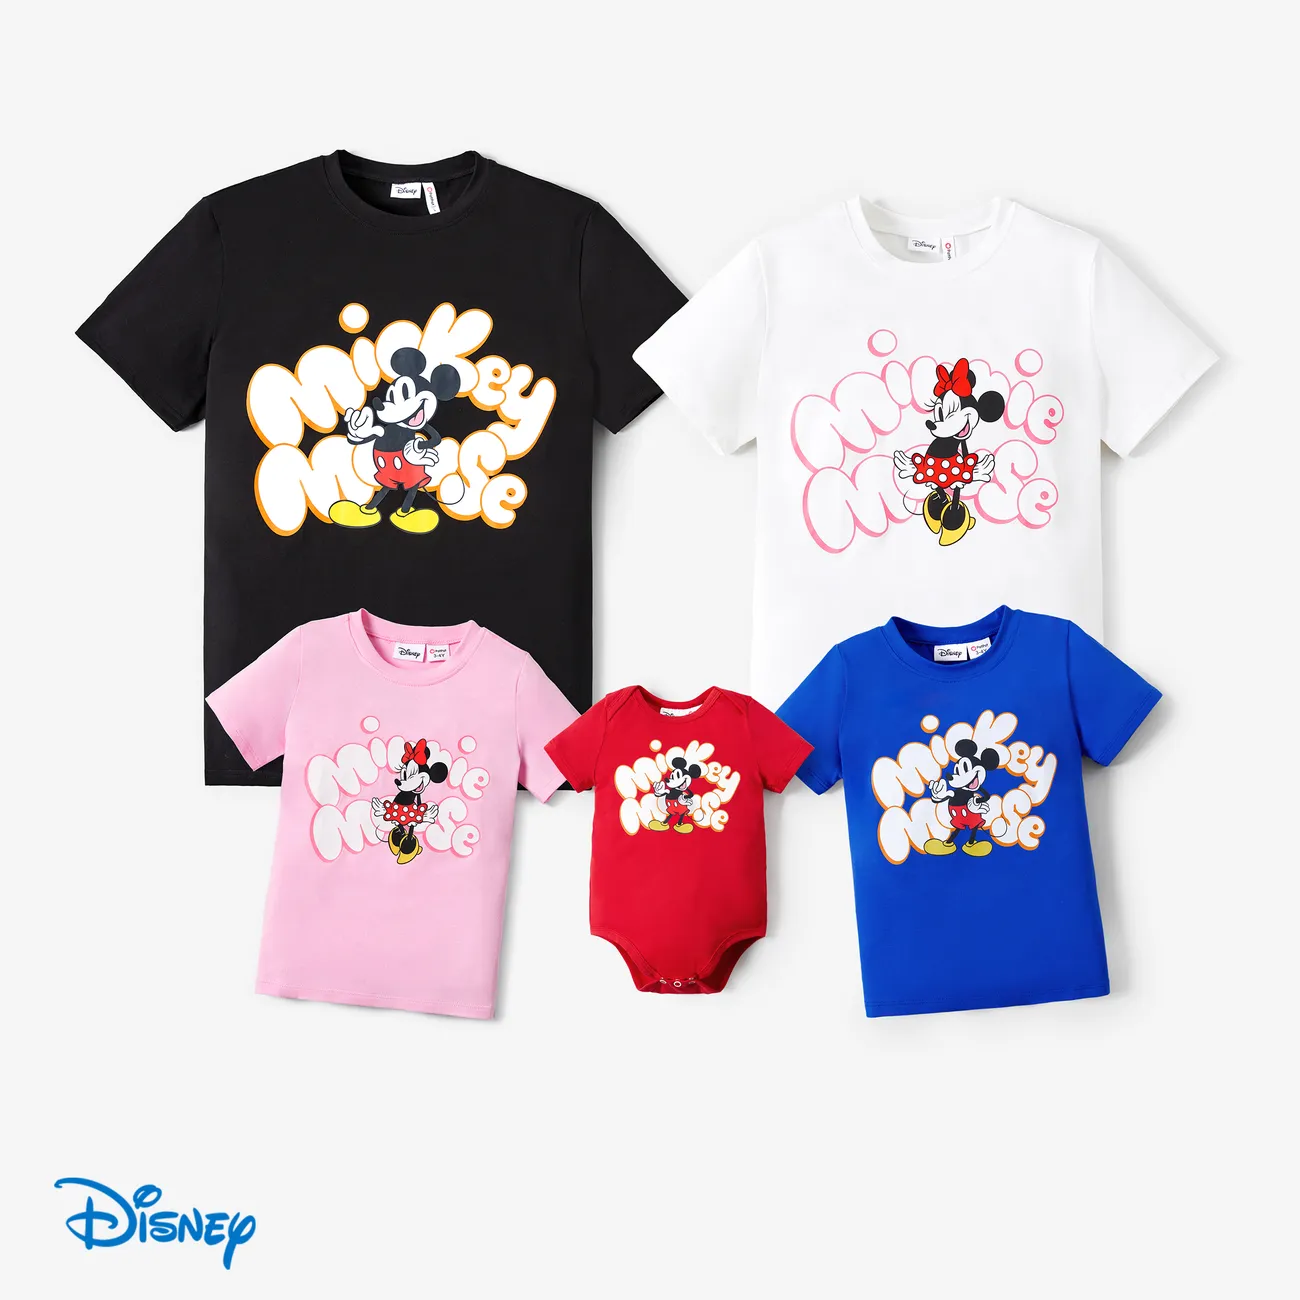 Disney Mickey and Friends Look de família Dia da Mãe Manga curta Conjuntos de roupa para a família Tops Rosa big image 1